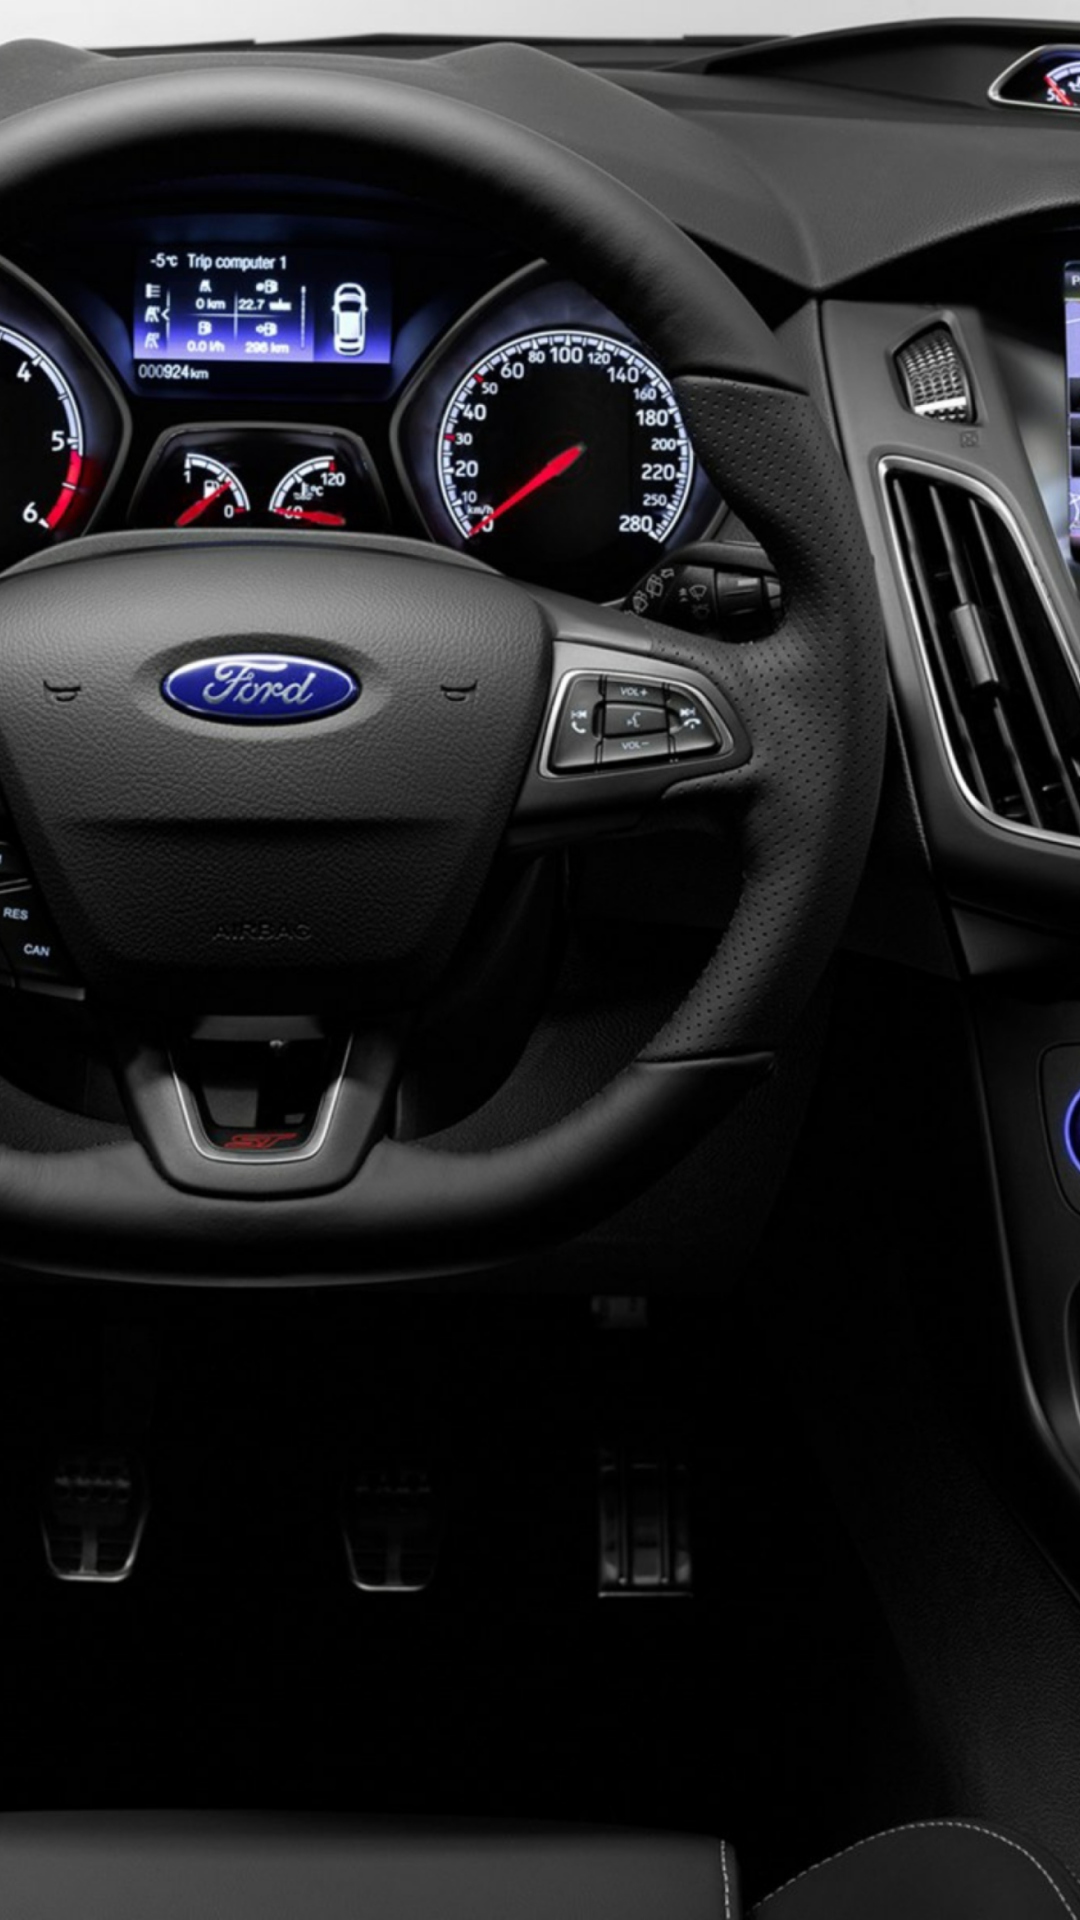 Ford Focus St 2015 wallpaper 1080x1920